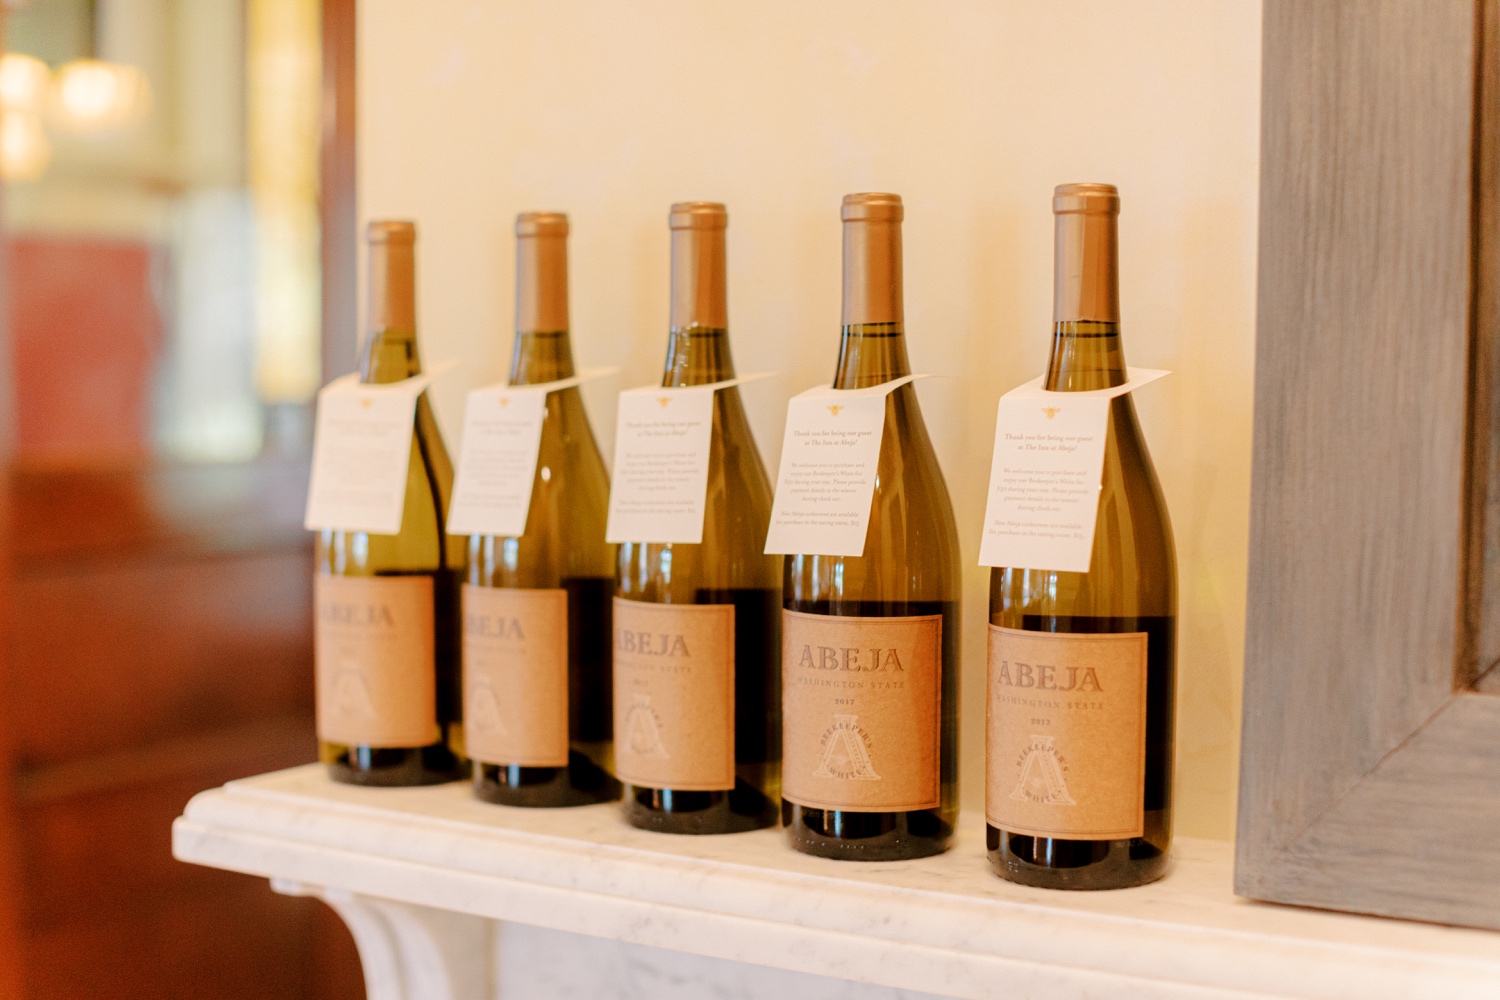 Abeja winery wine bottles